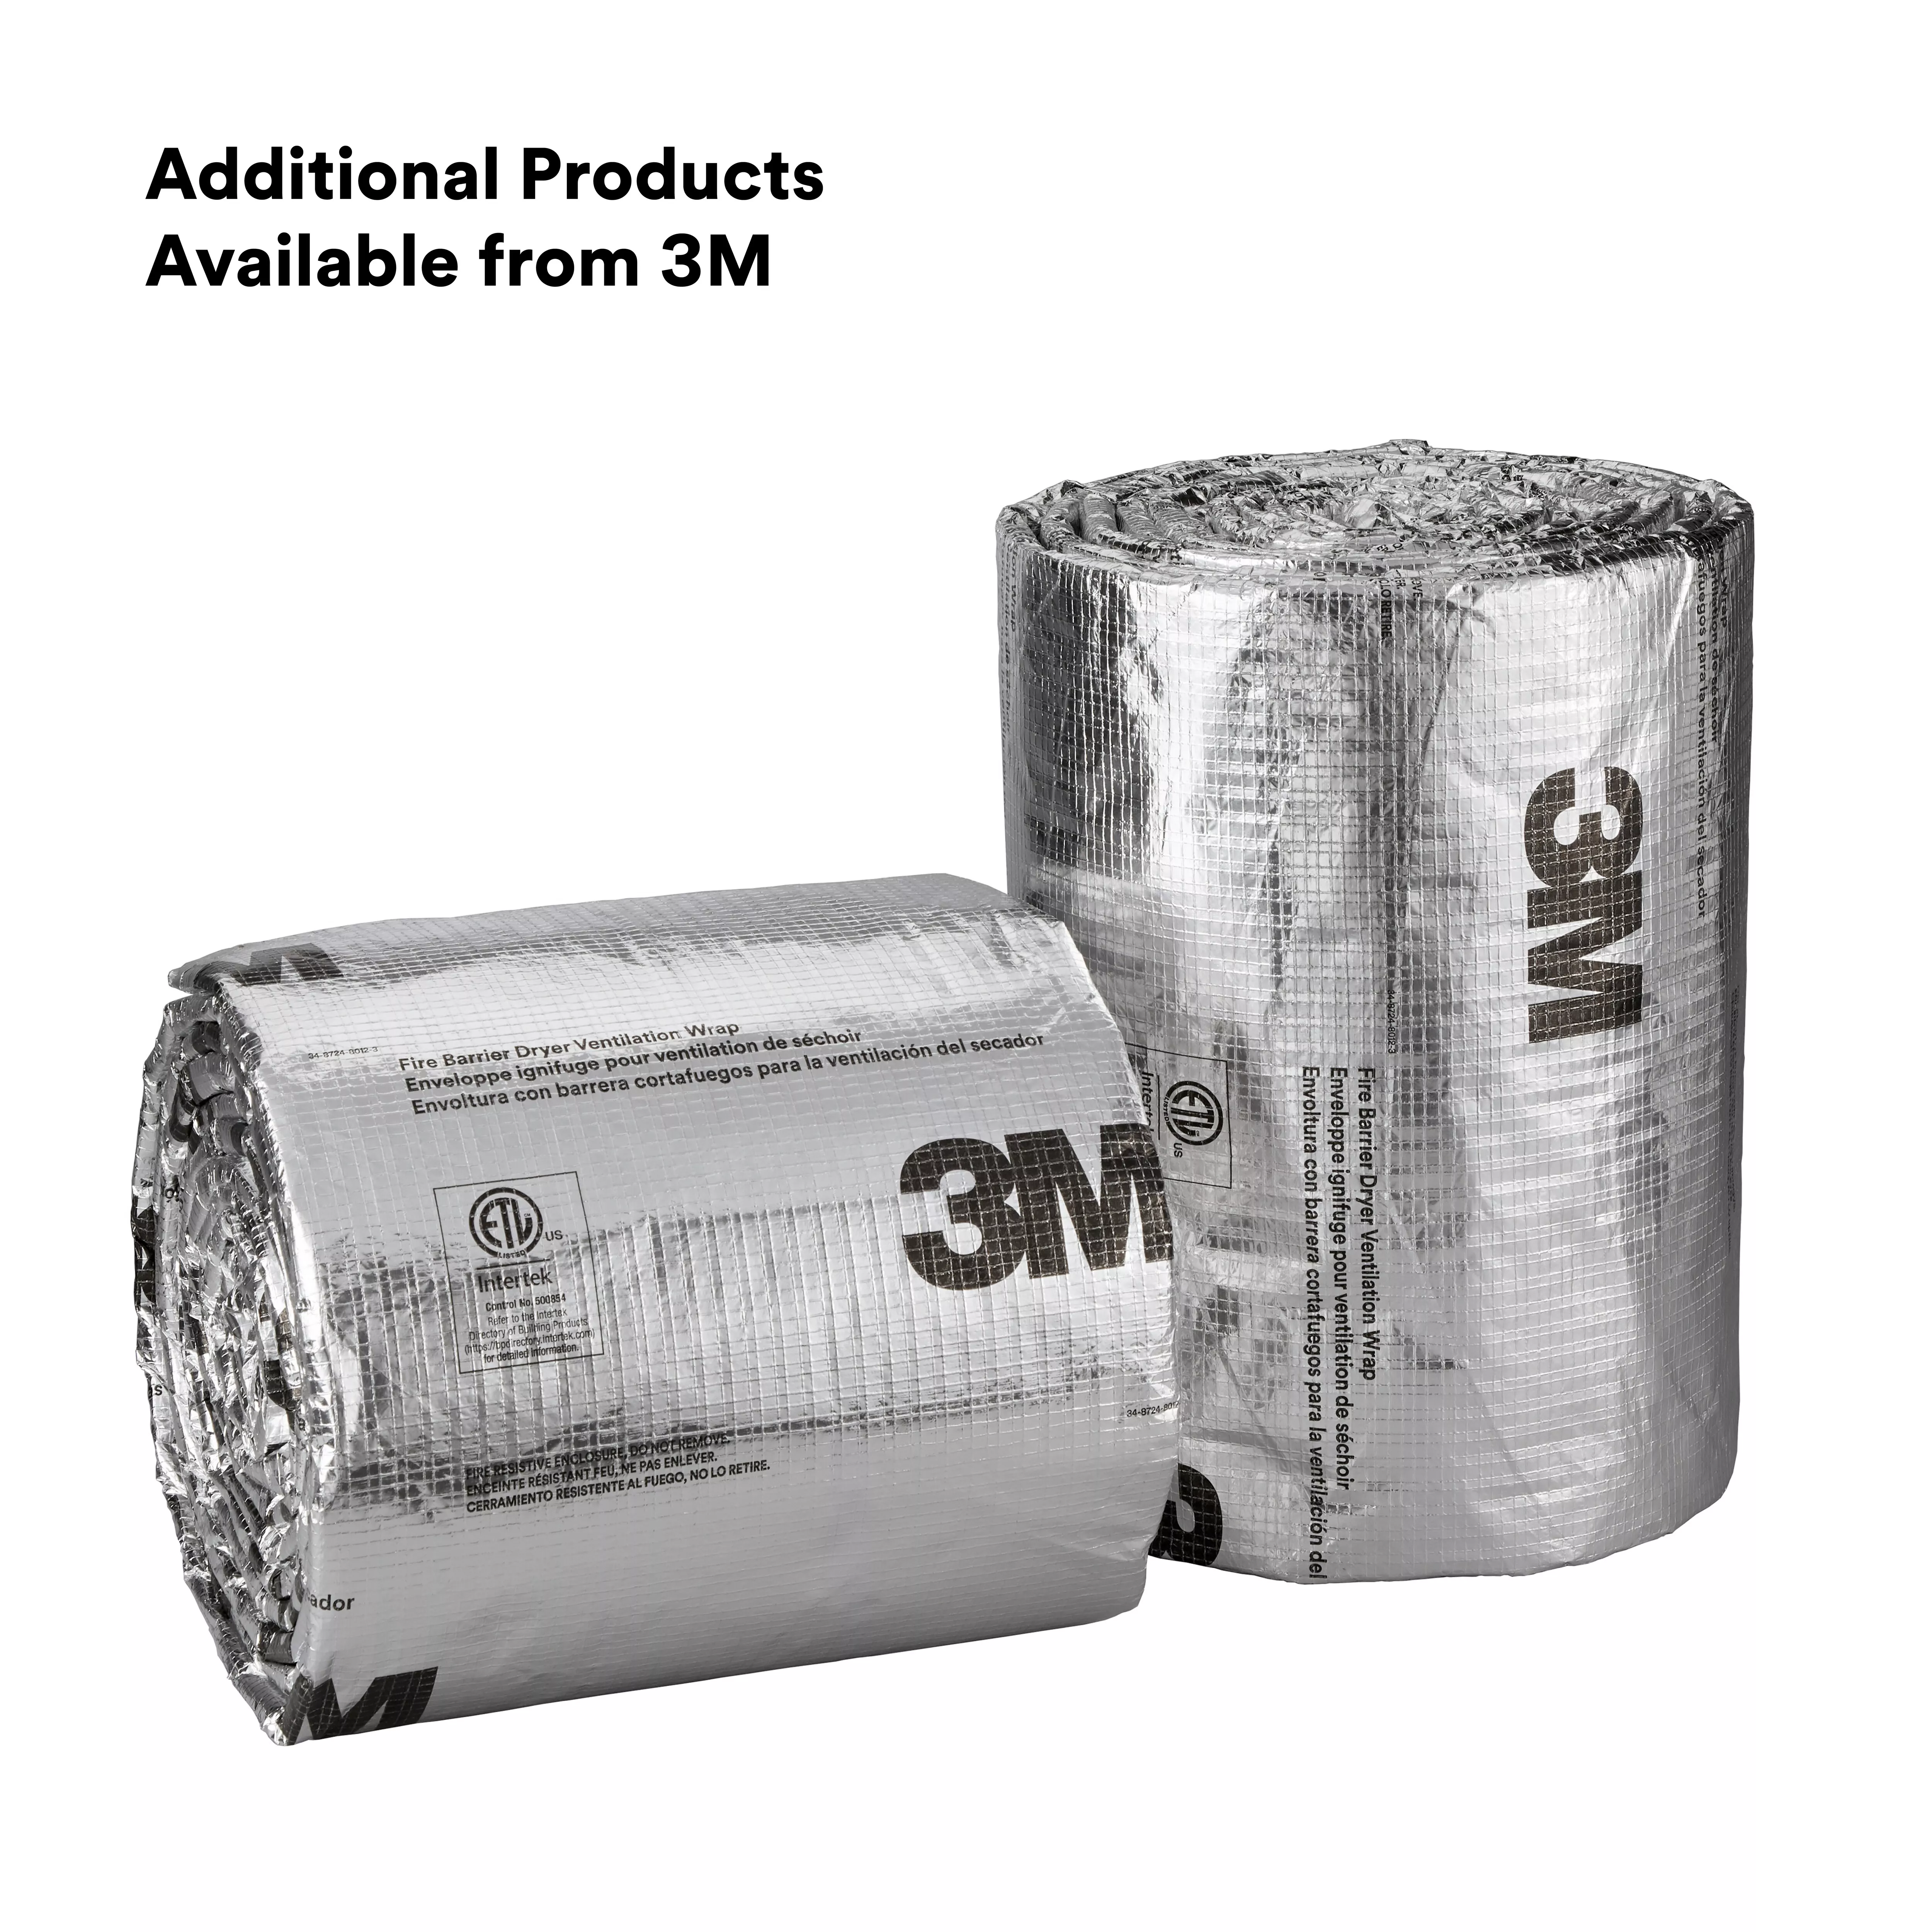 SKU 7100216418 | 3M™ Fire Barrier Dryer Ventilation Wrap DVW16